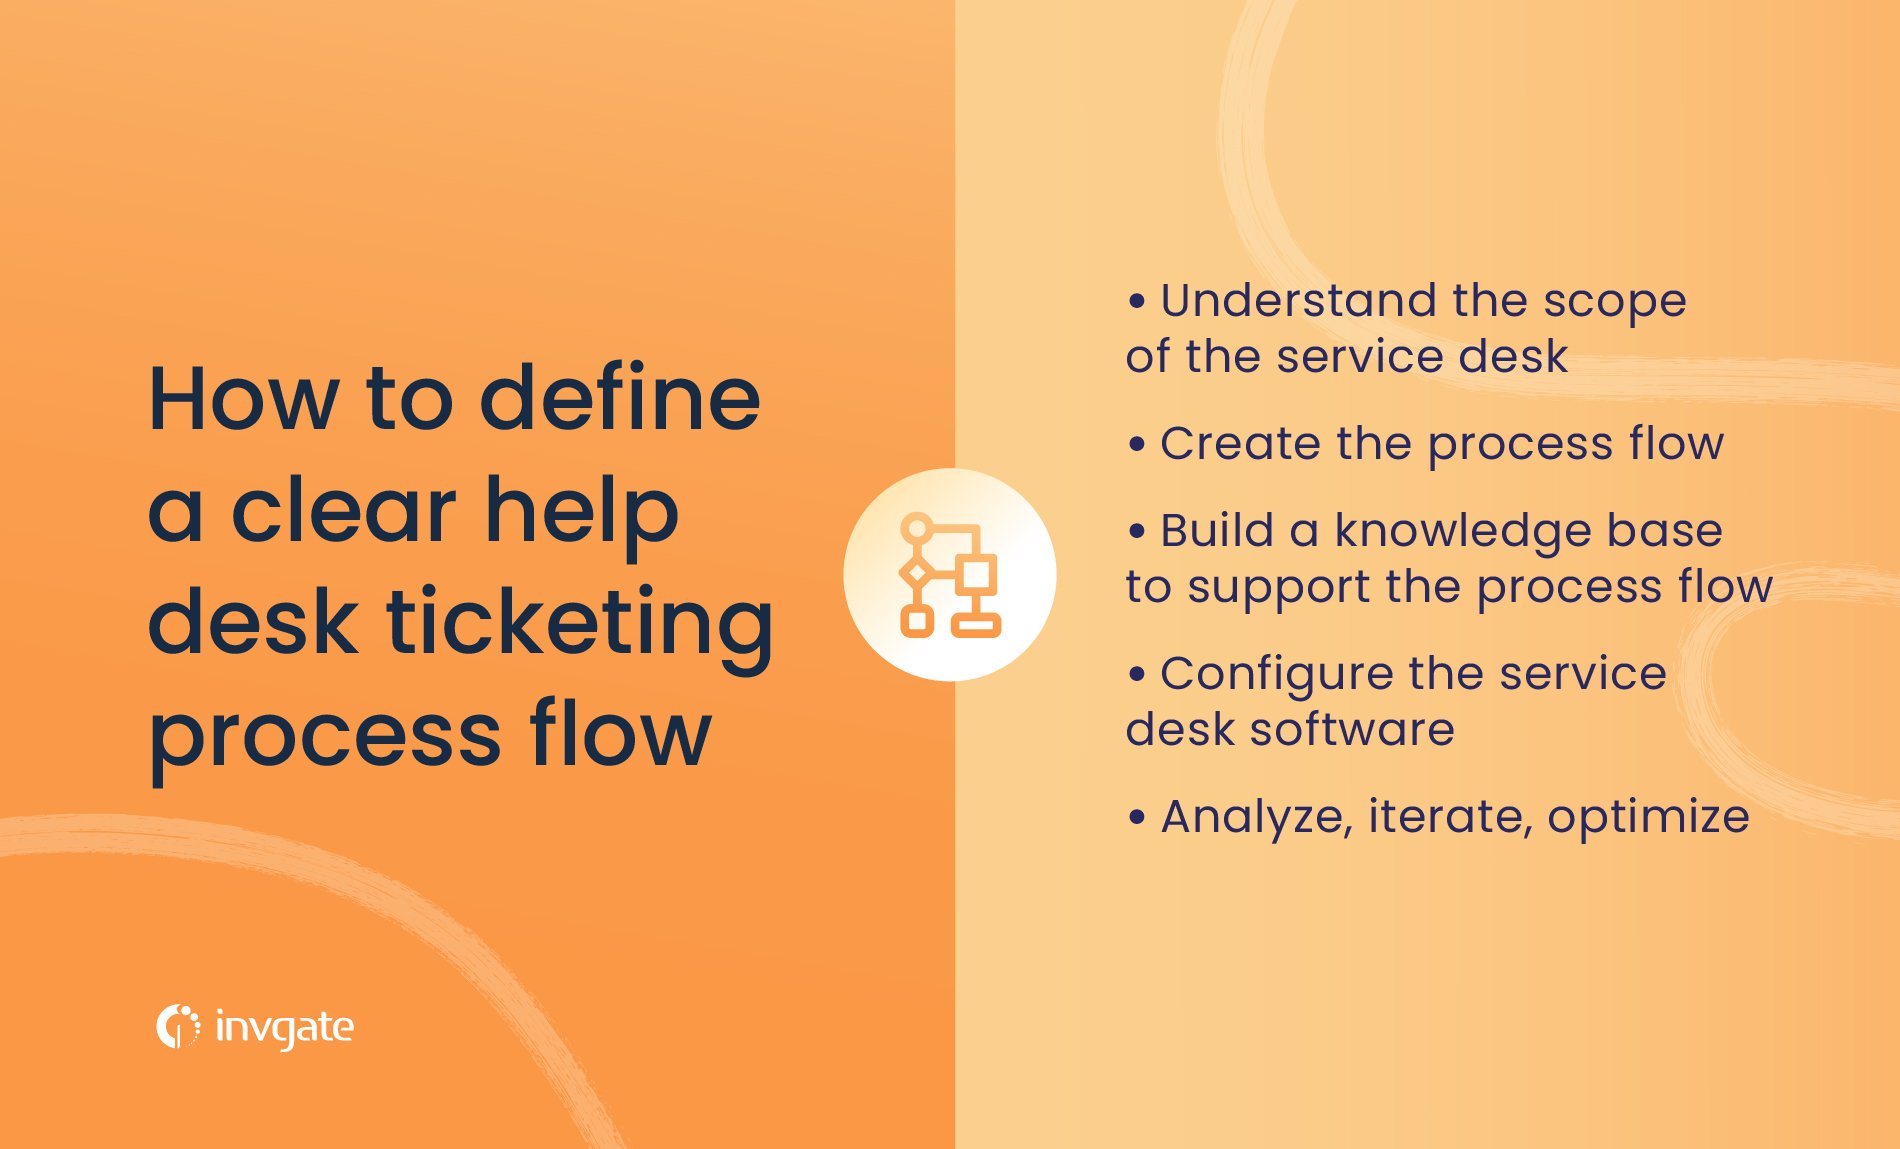 5 steps to define a clear help desk ticketing process flow.